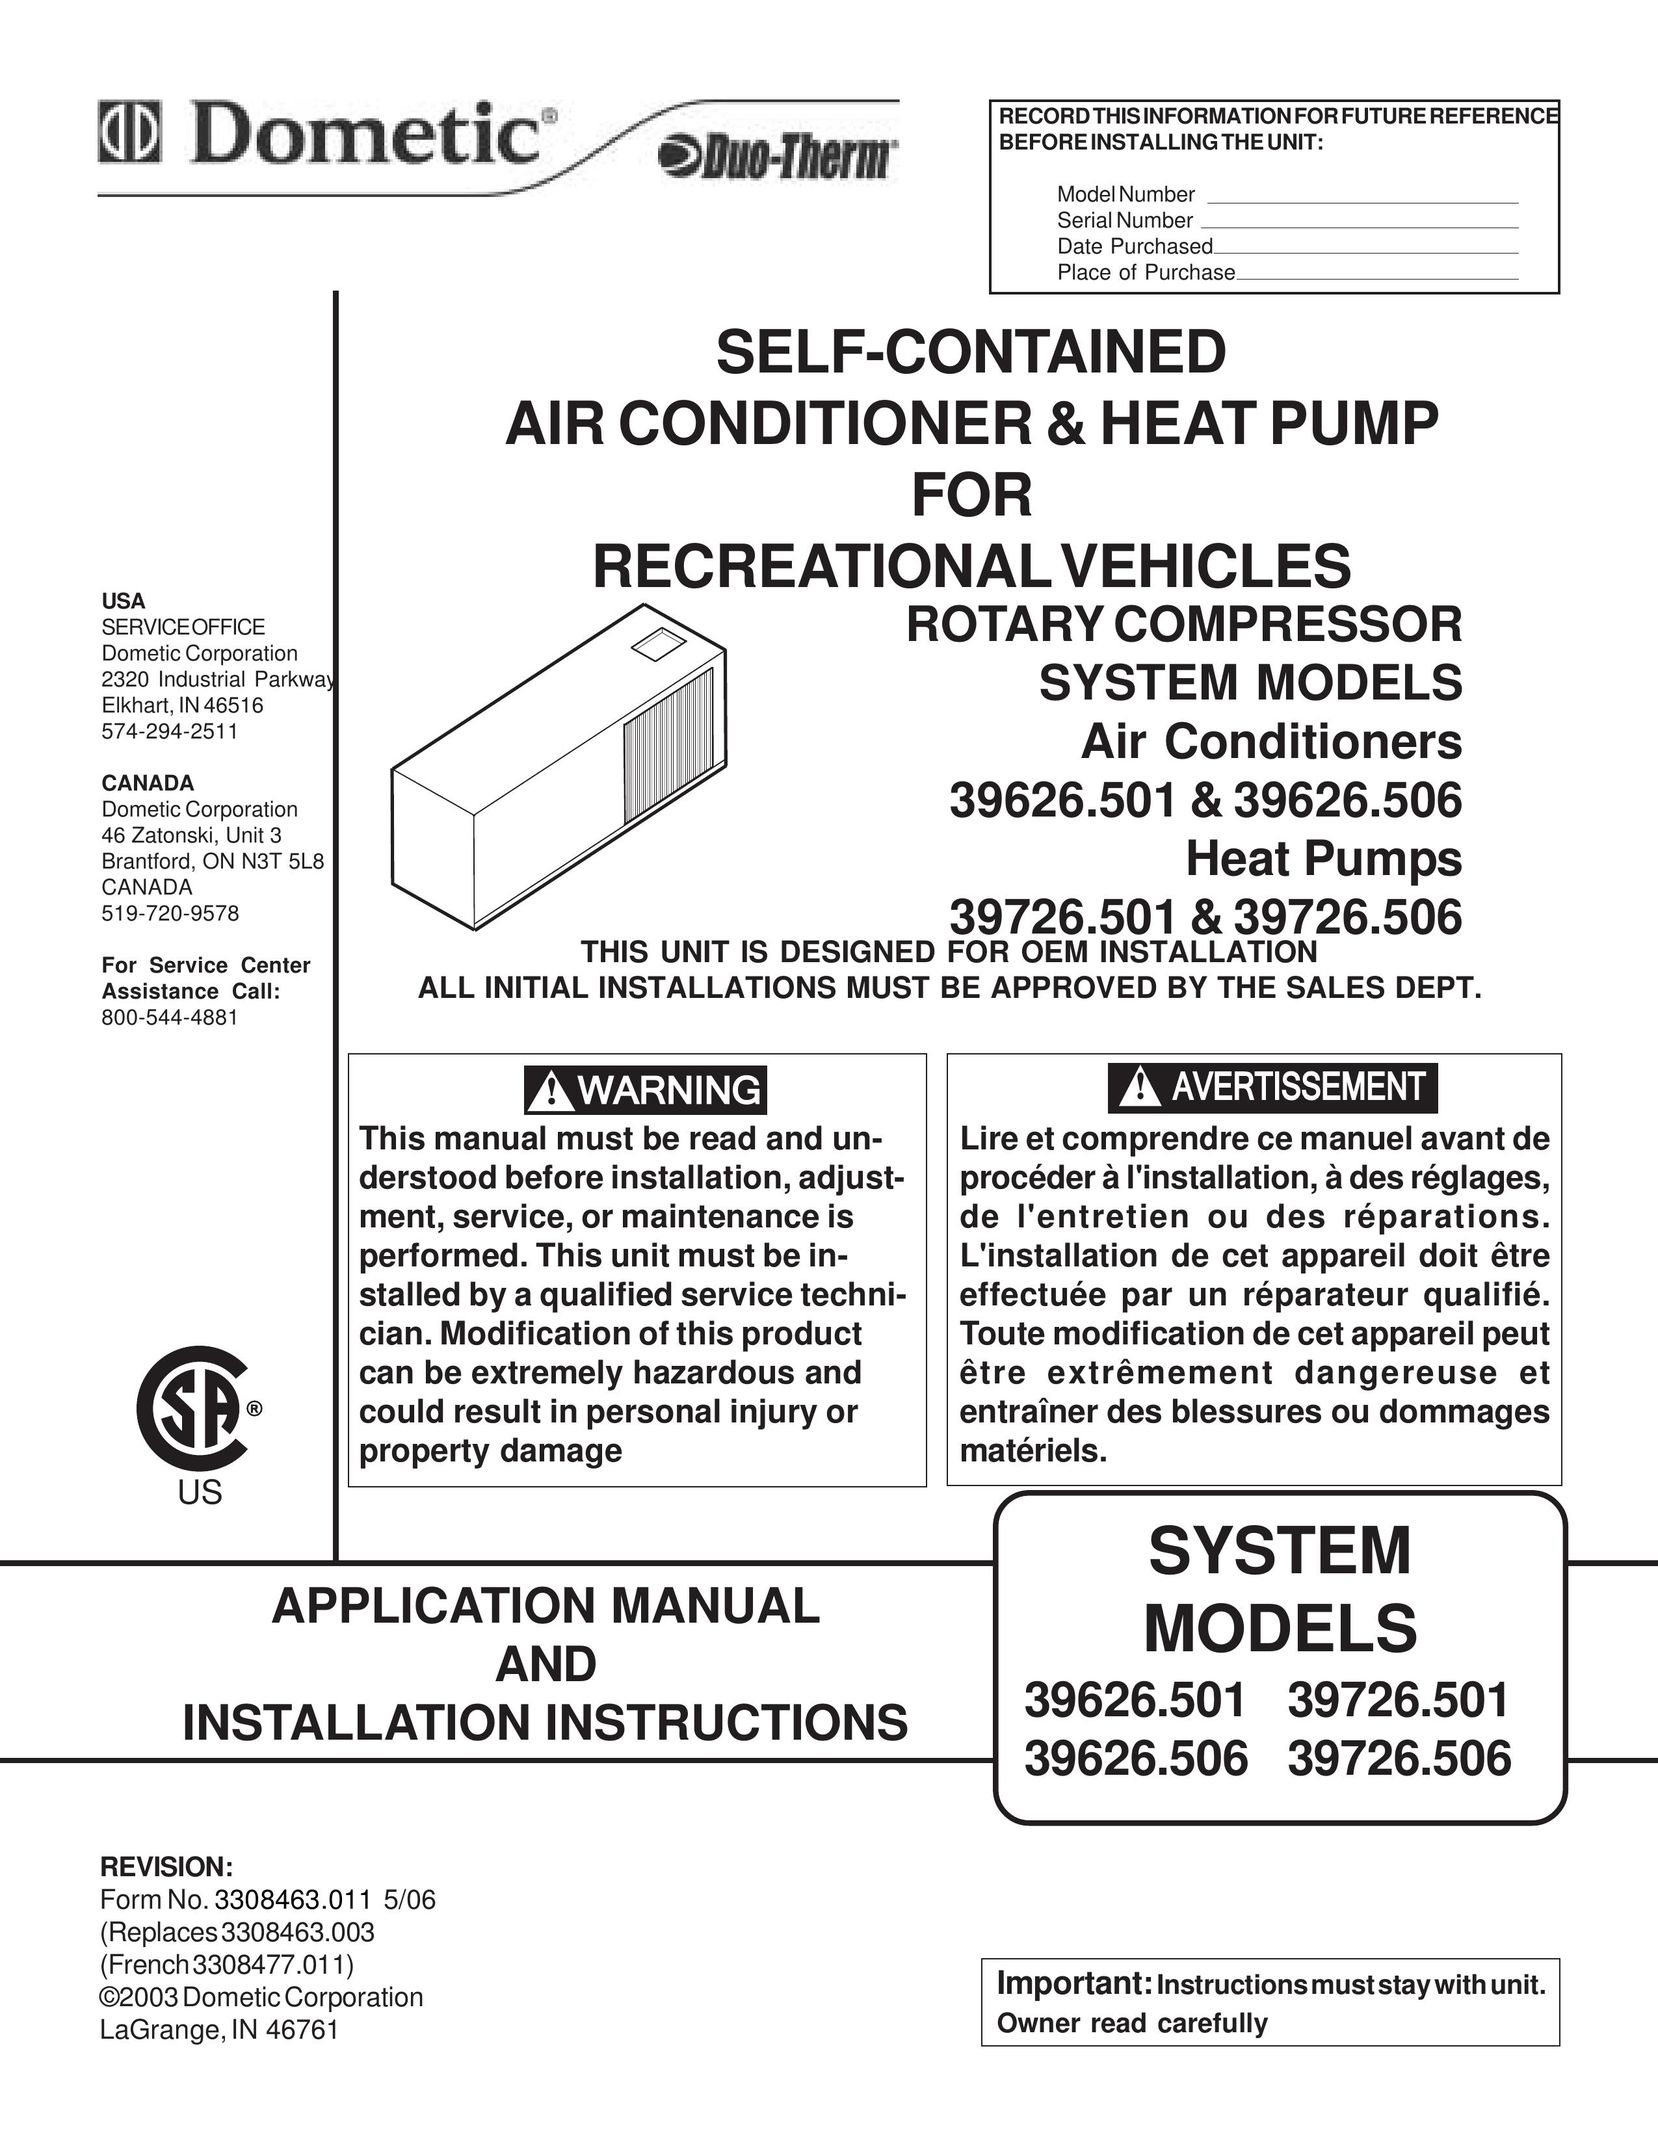 Dometic 39726.501 Air Conditioner User Manual